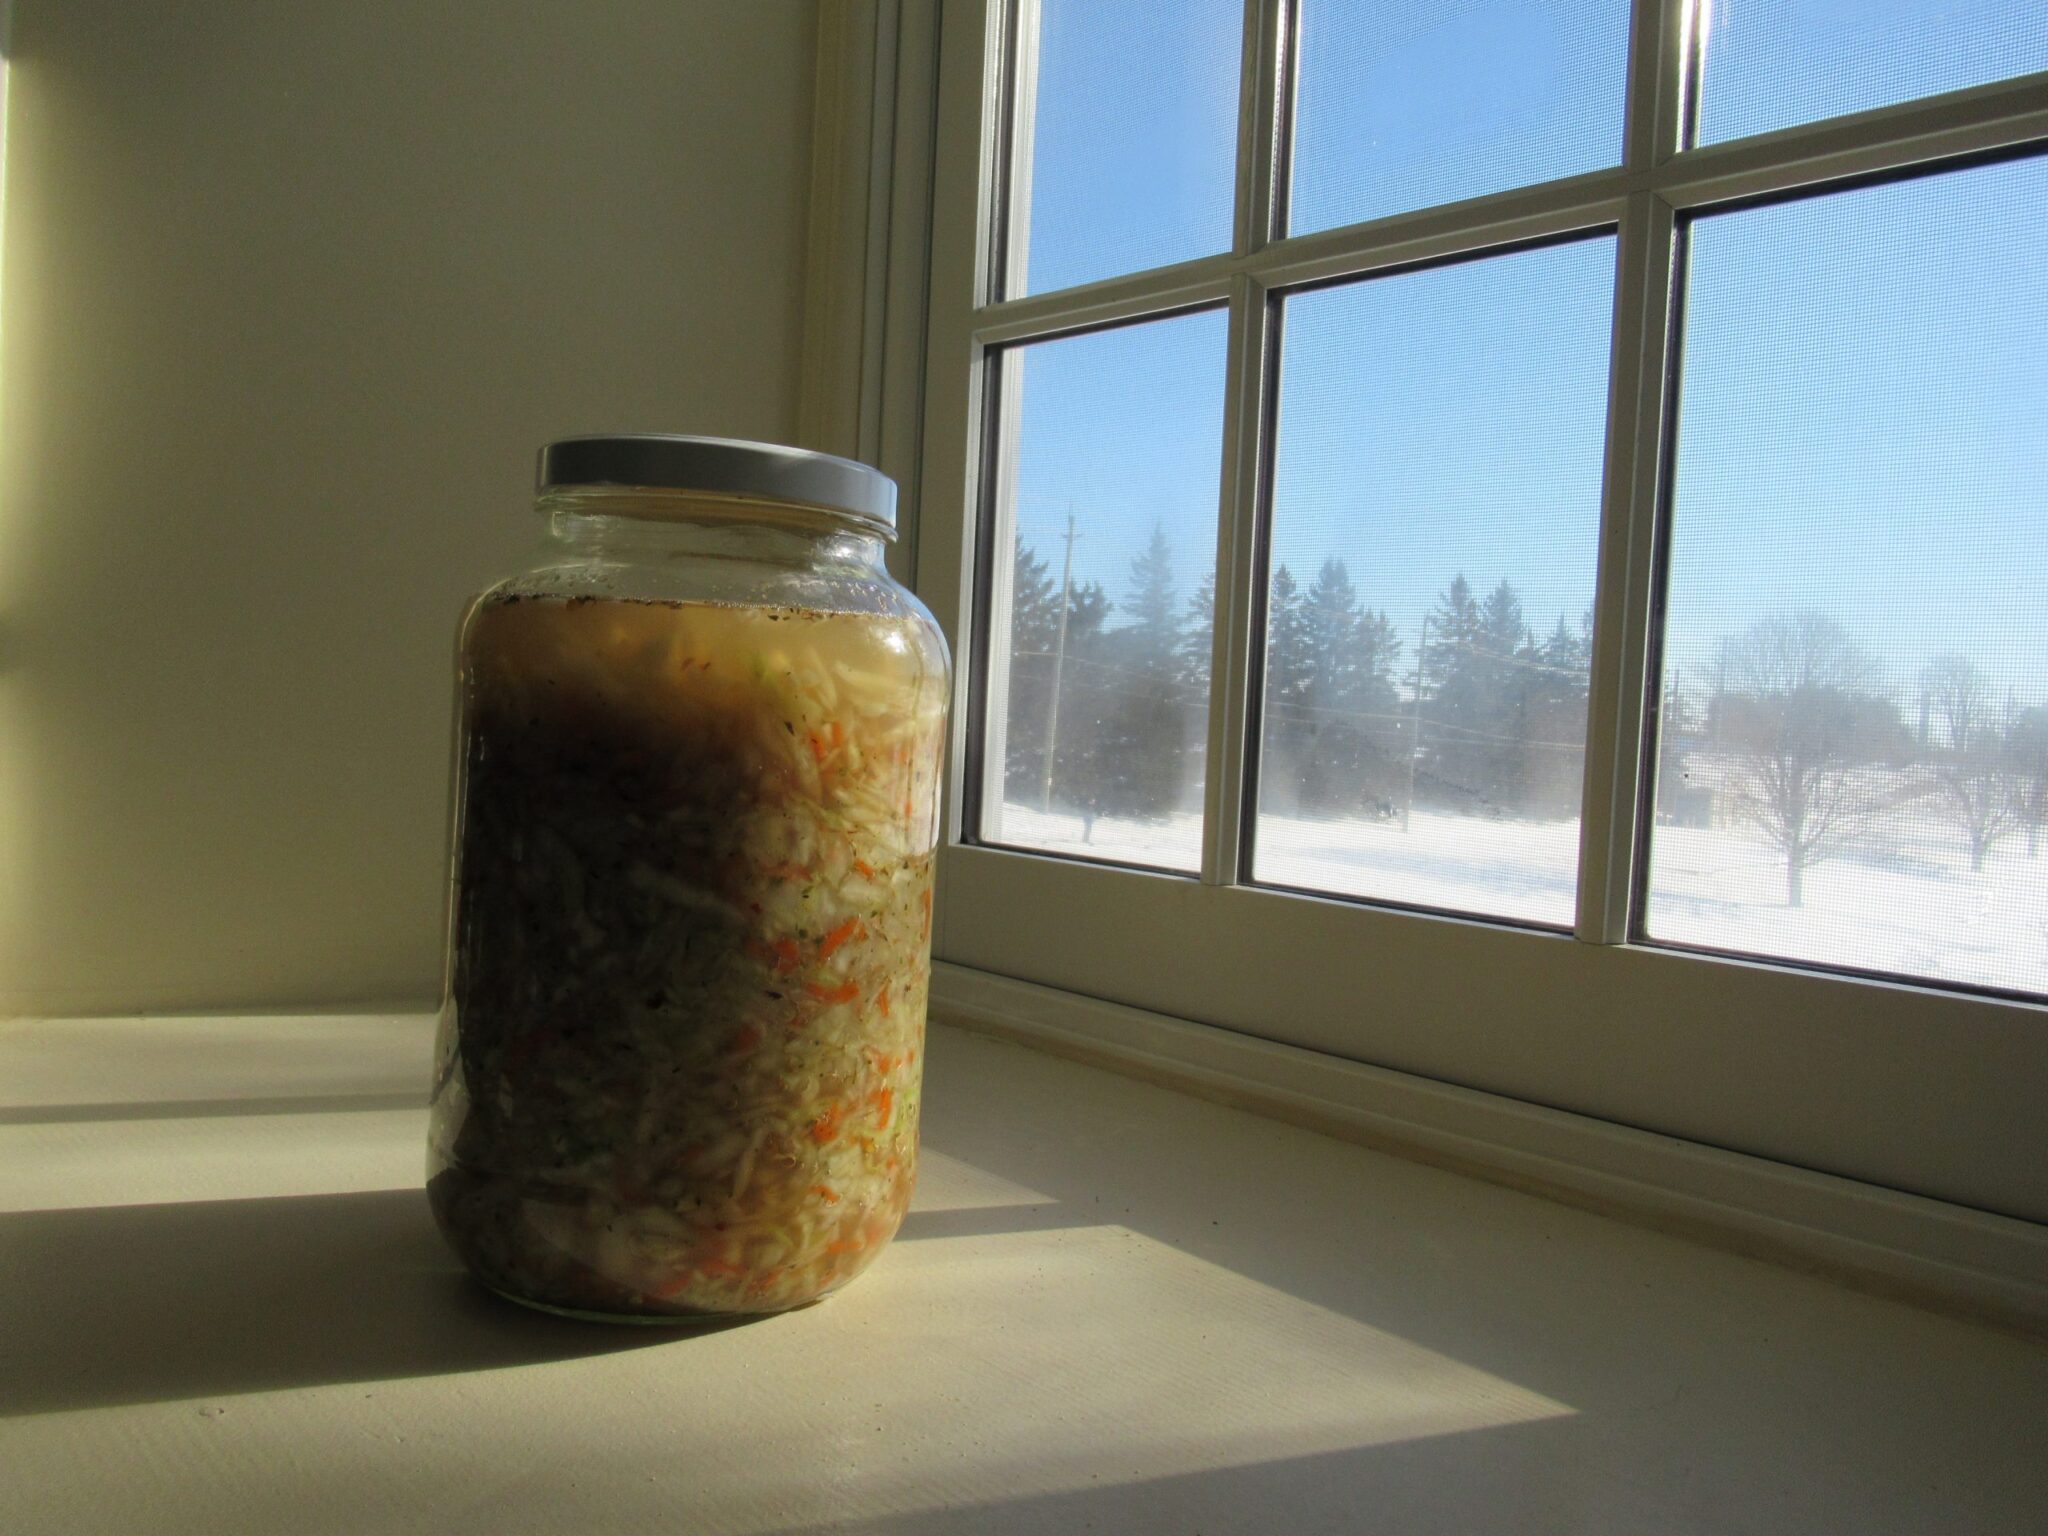 A mason jar of sauerkraut sits on the window sill, a winter scene outside.